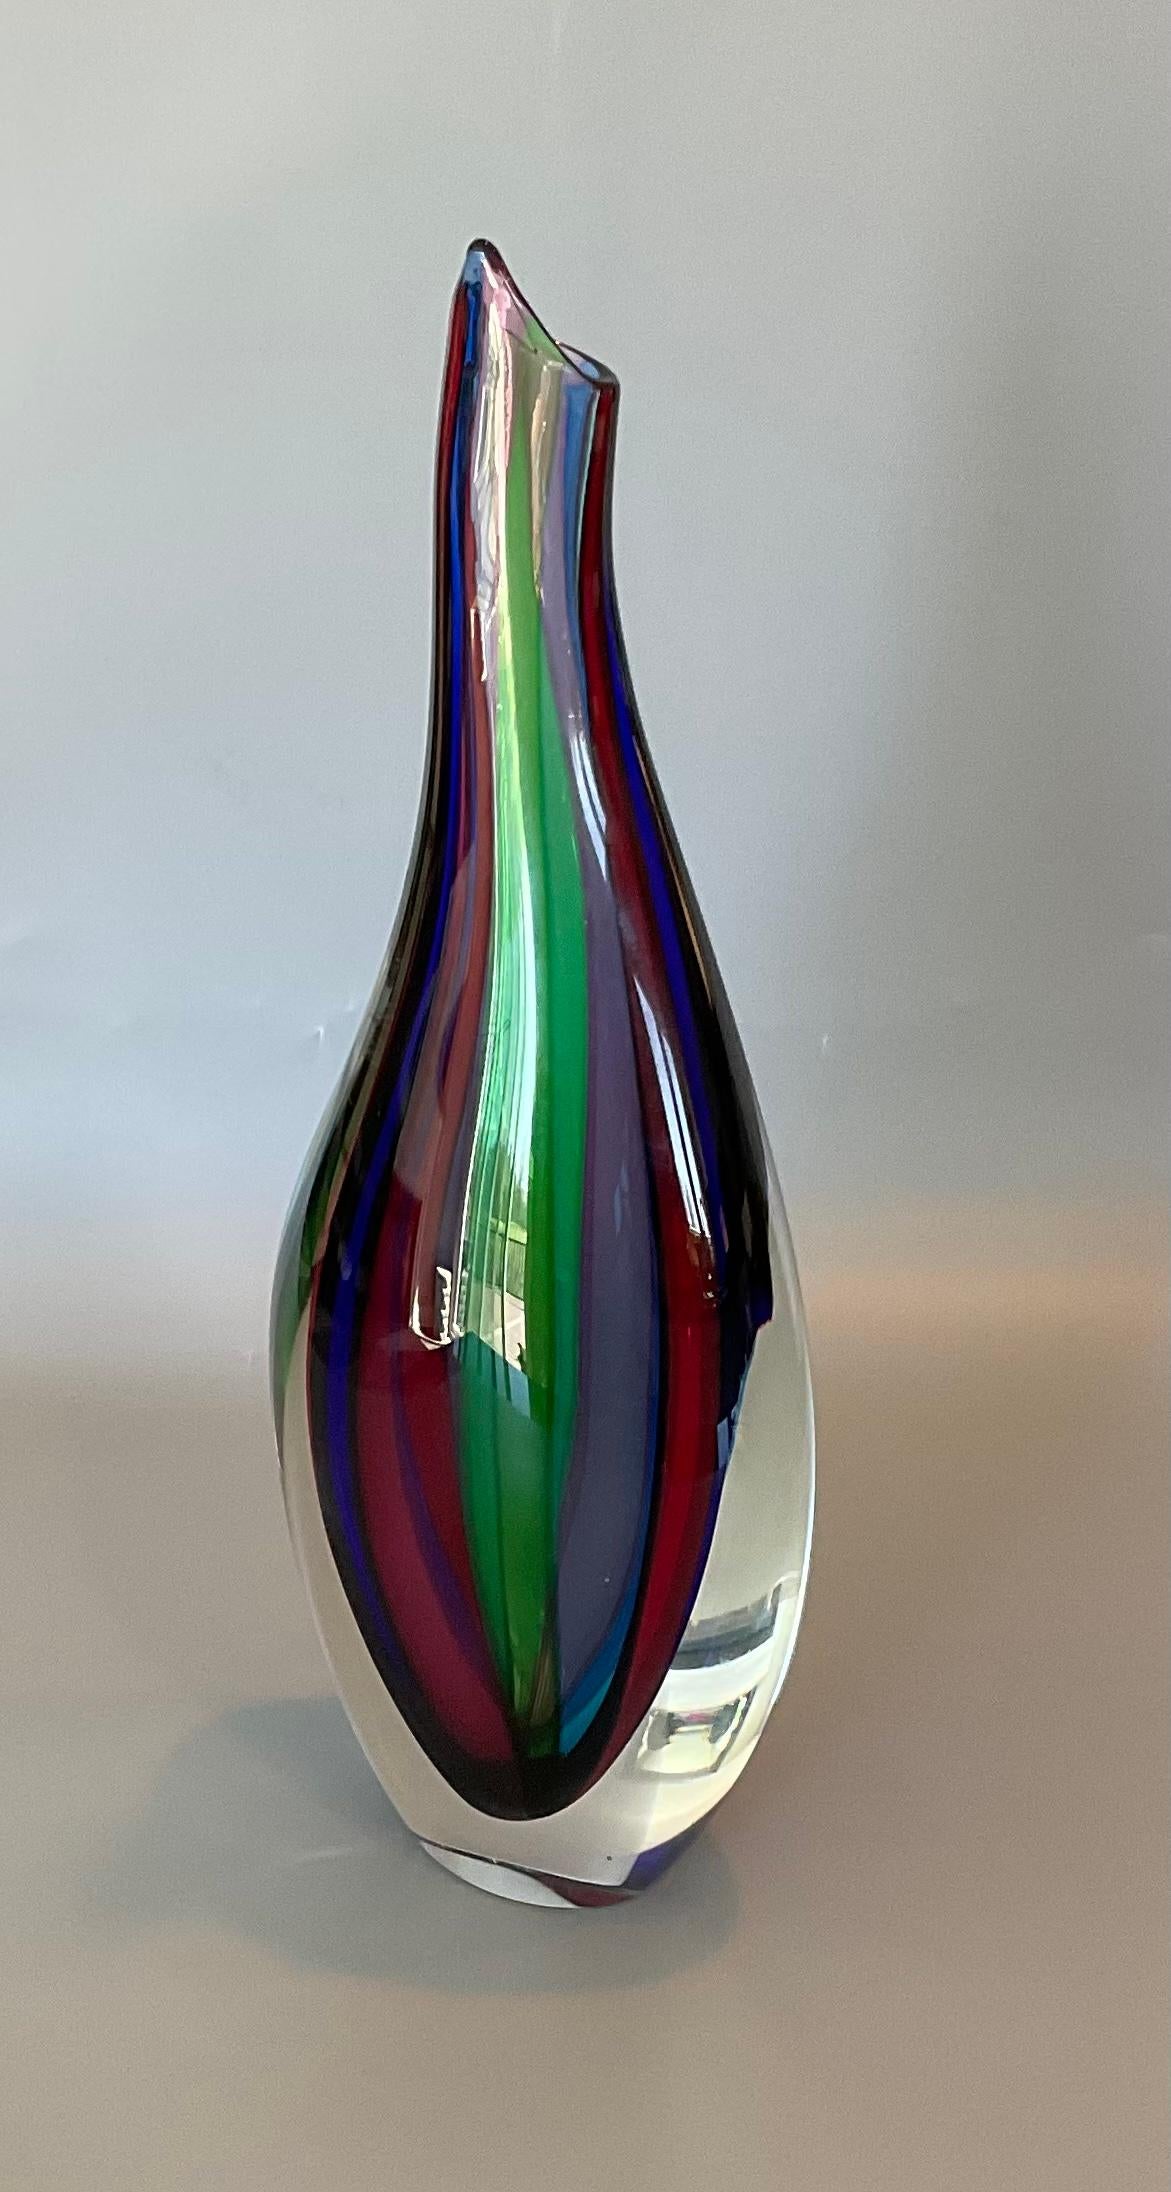 Italian Giuliani Mian Murano Art Glass Vase Striped Multi Color Signed by the Artist For Sale